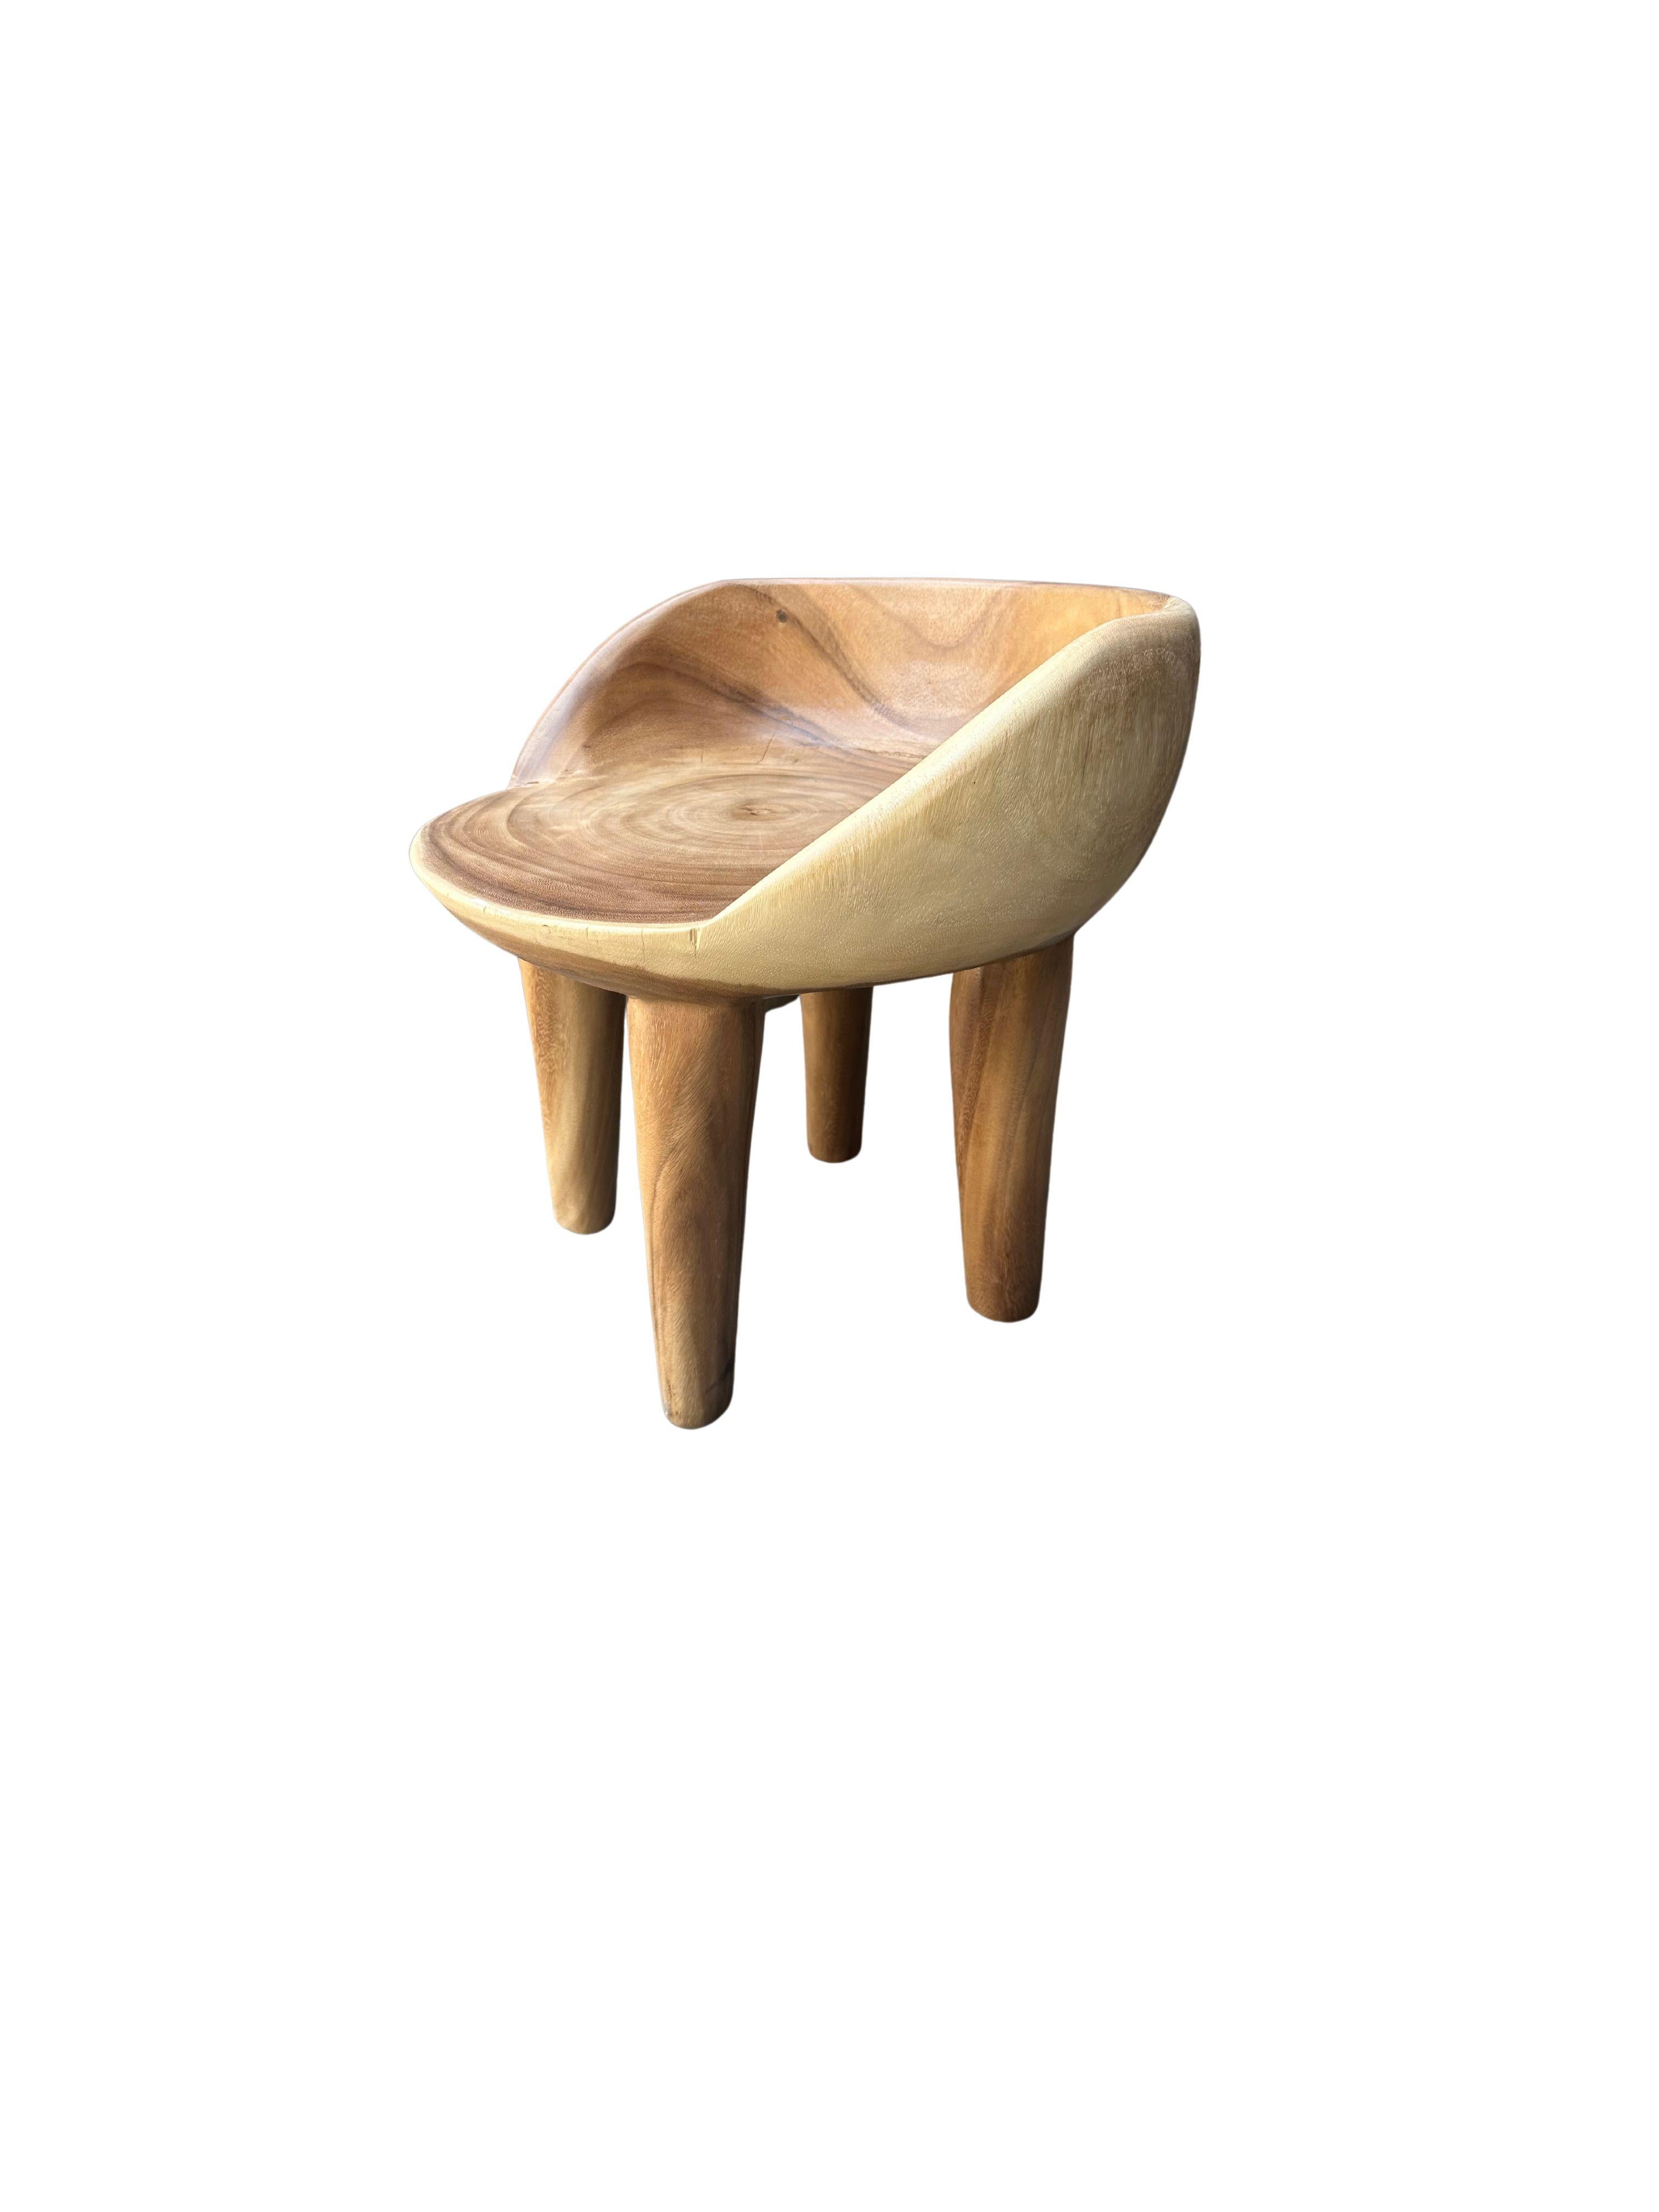 Contemporary Sculptural Suar Wood Chair Modern Organic For Sale